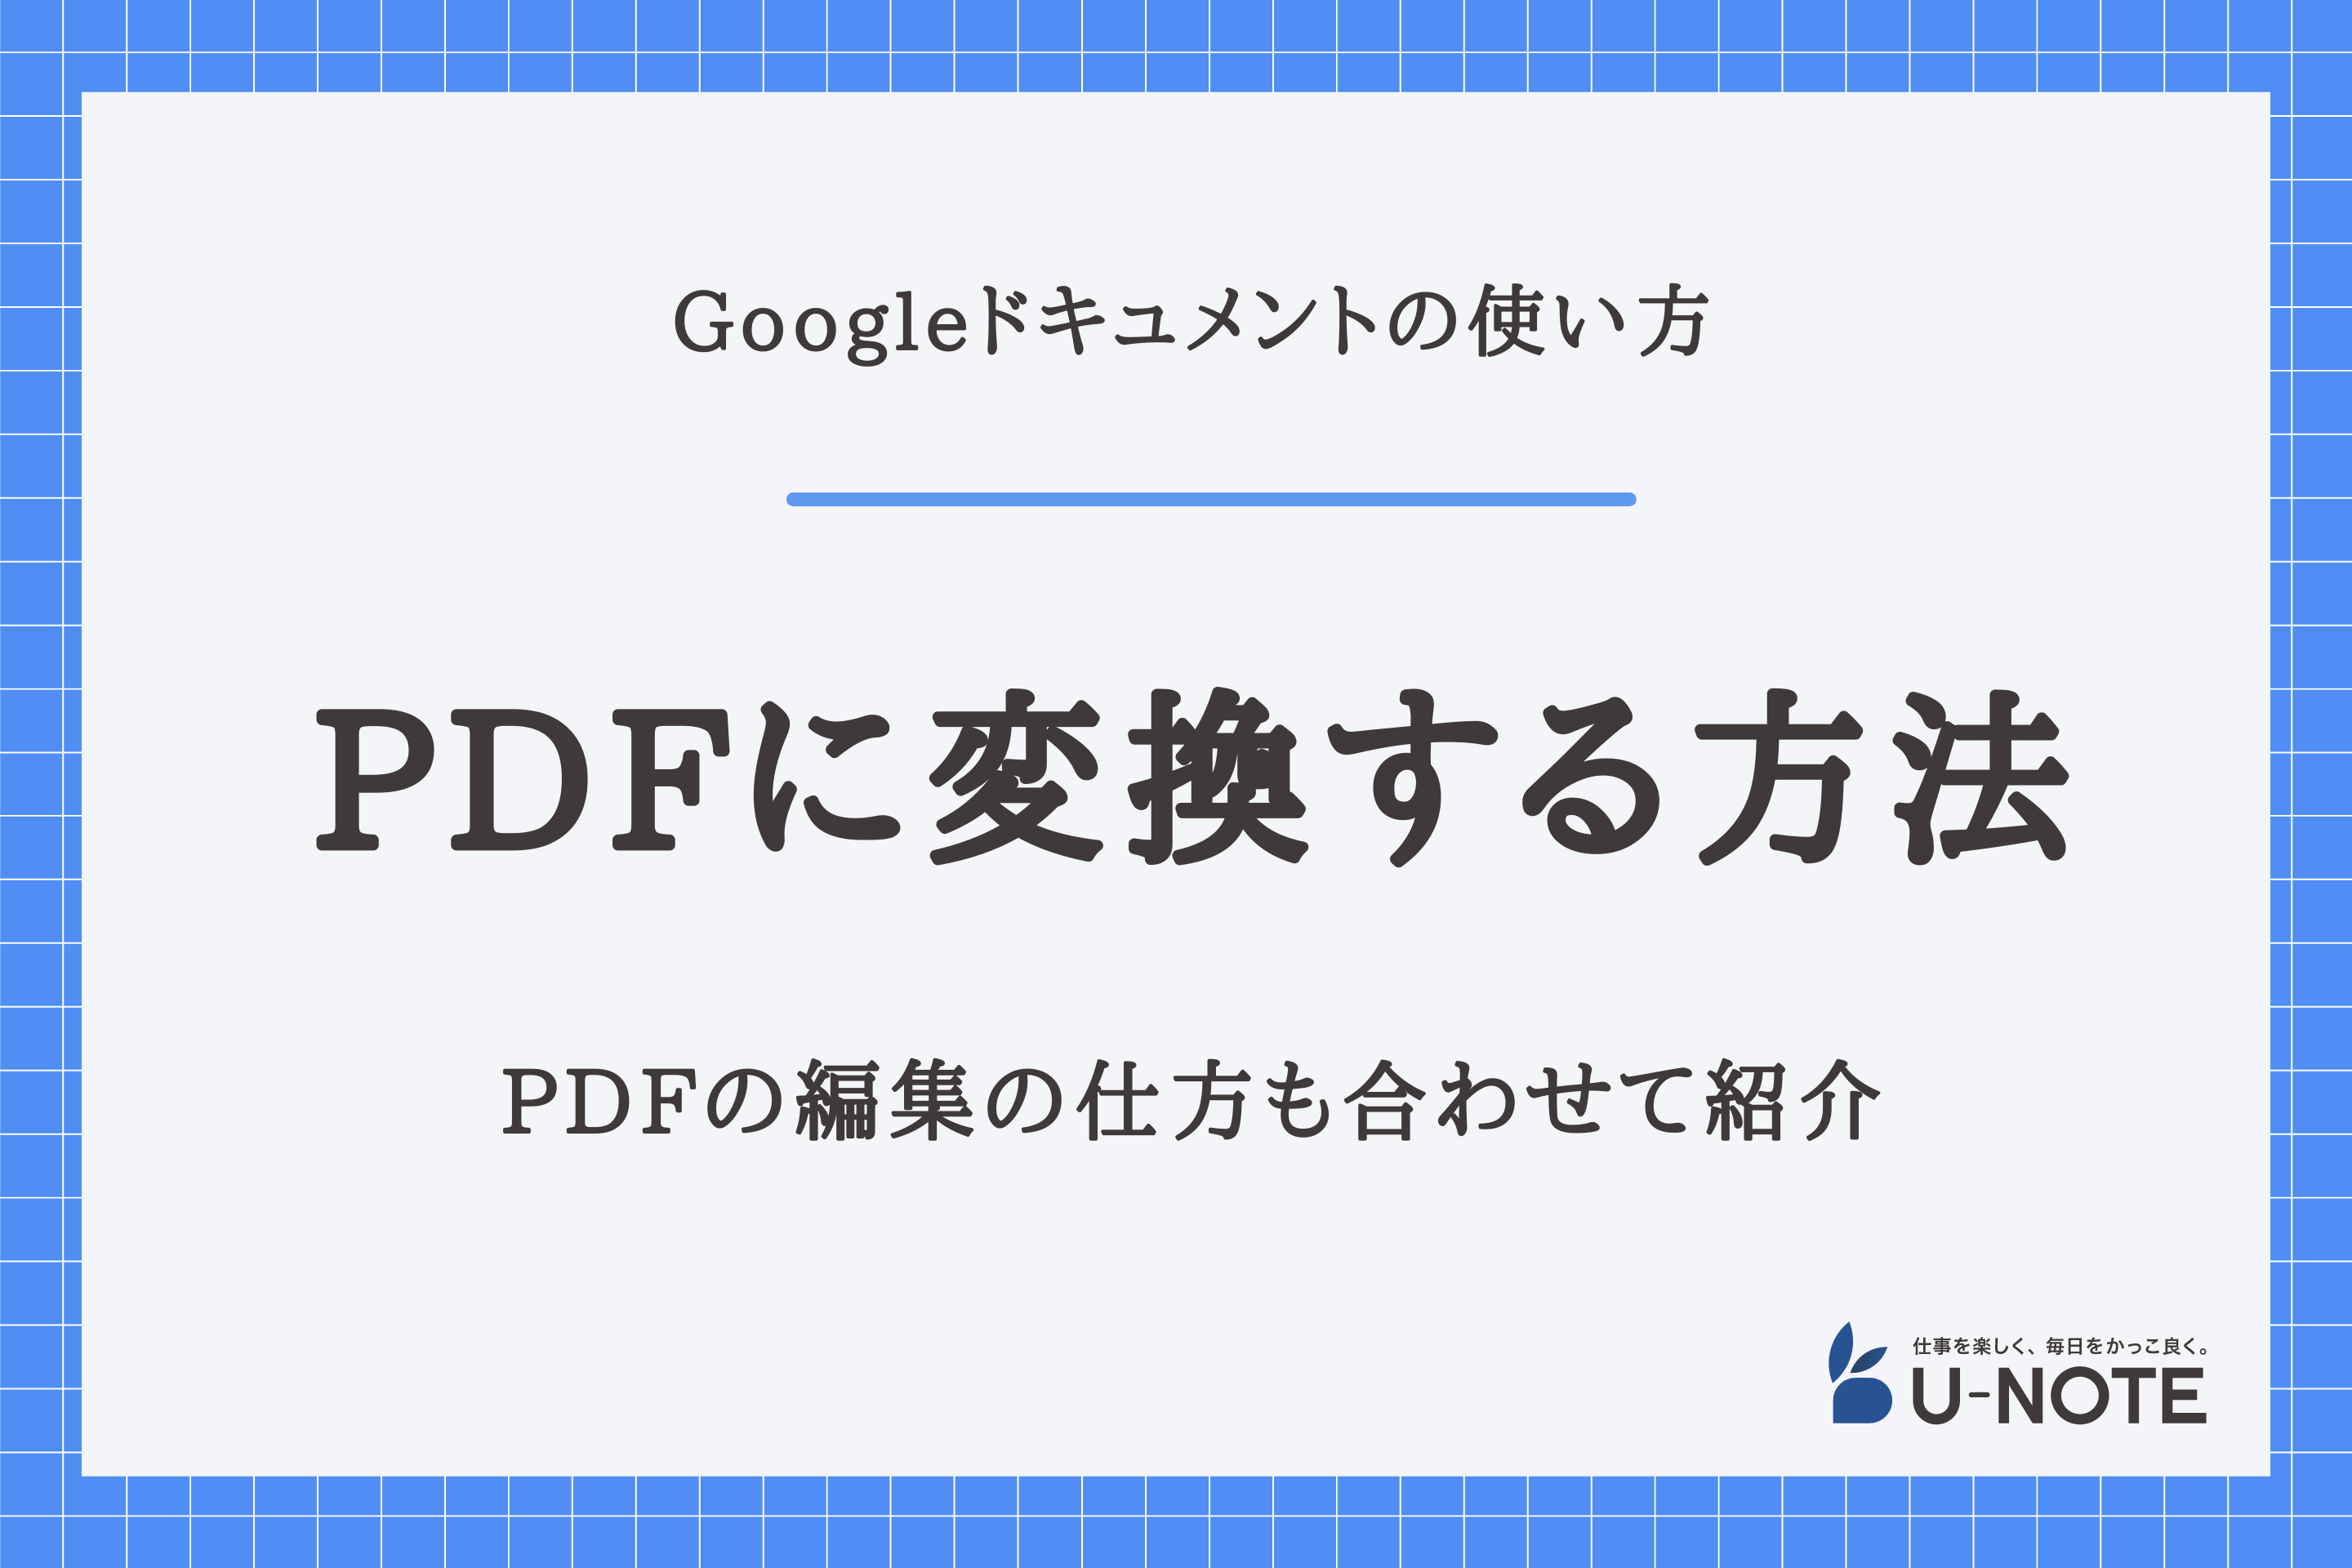 GoogleドキュメントをPDFに変換する方法｜PDFの編集の仕方も合わせて紹介 - U-NOTE[ユーノート] - 仕事を楽しく、毎日をかっこ良く。  -